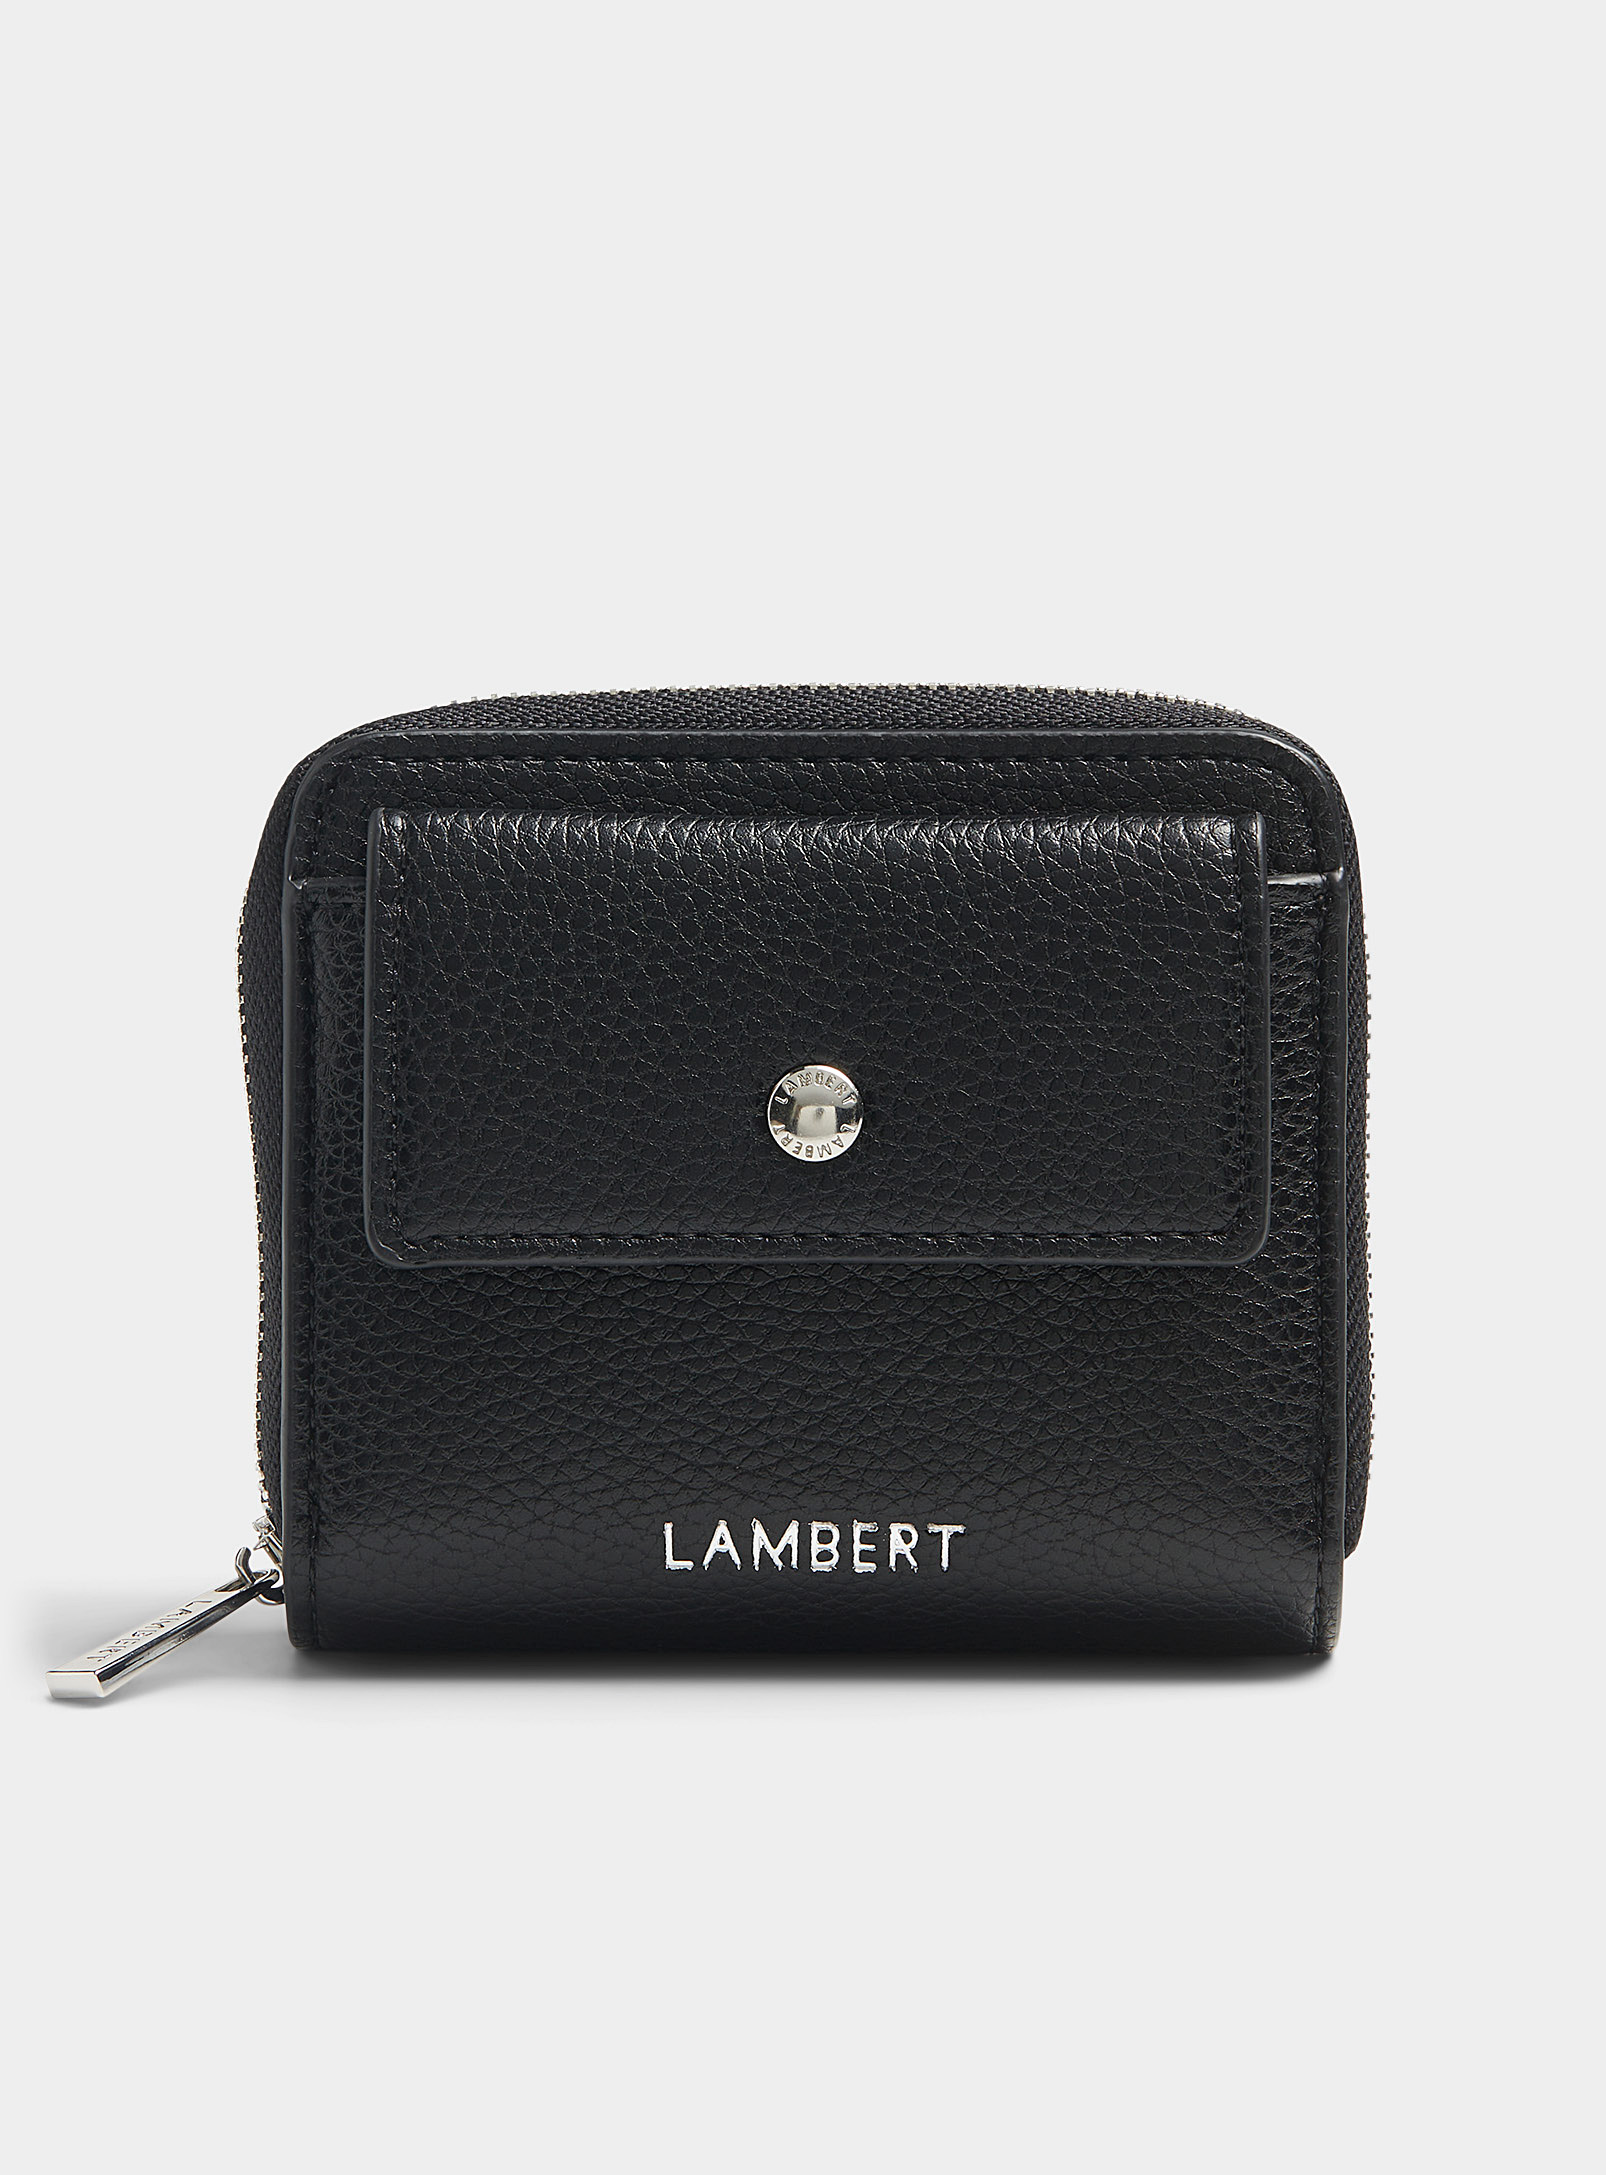 Lambert Nikki Smooth Wallet In Black